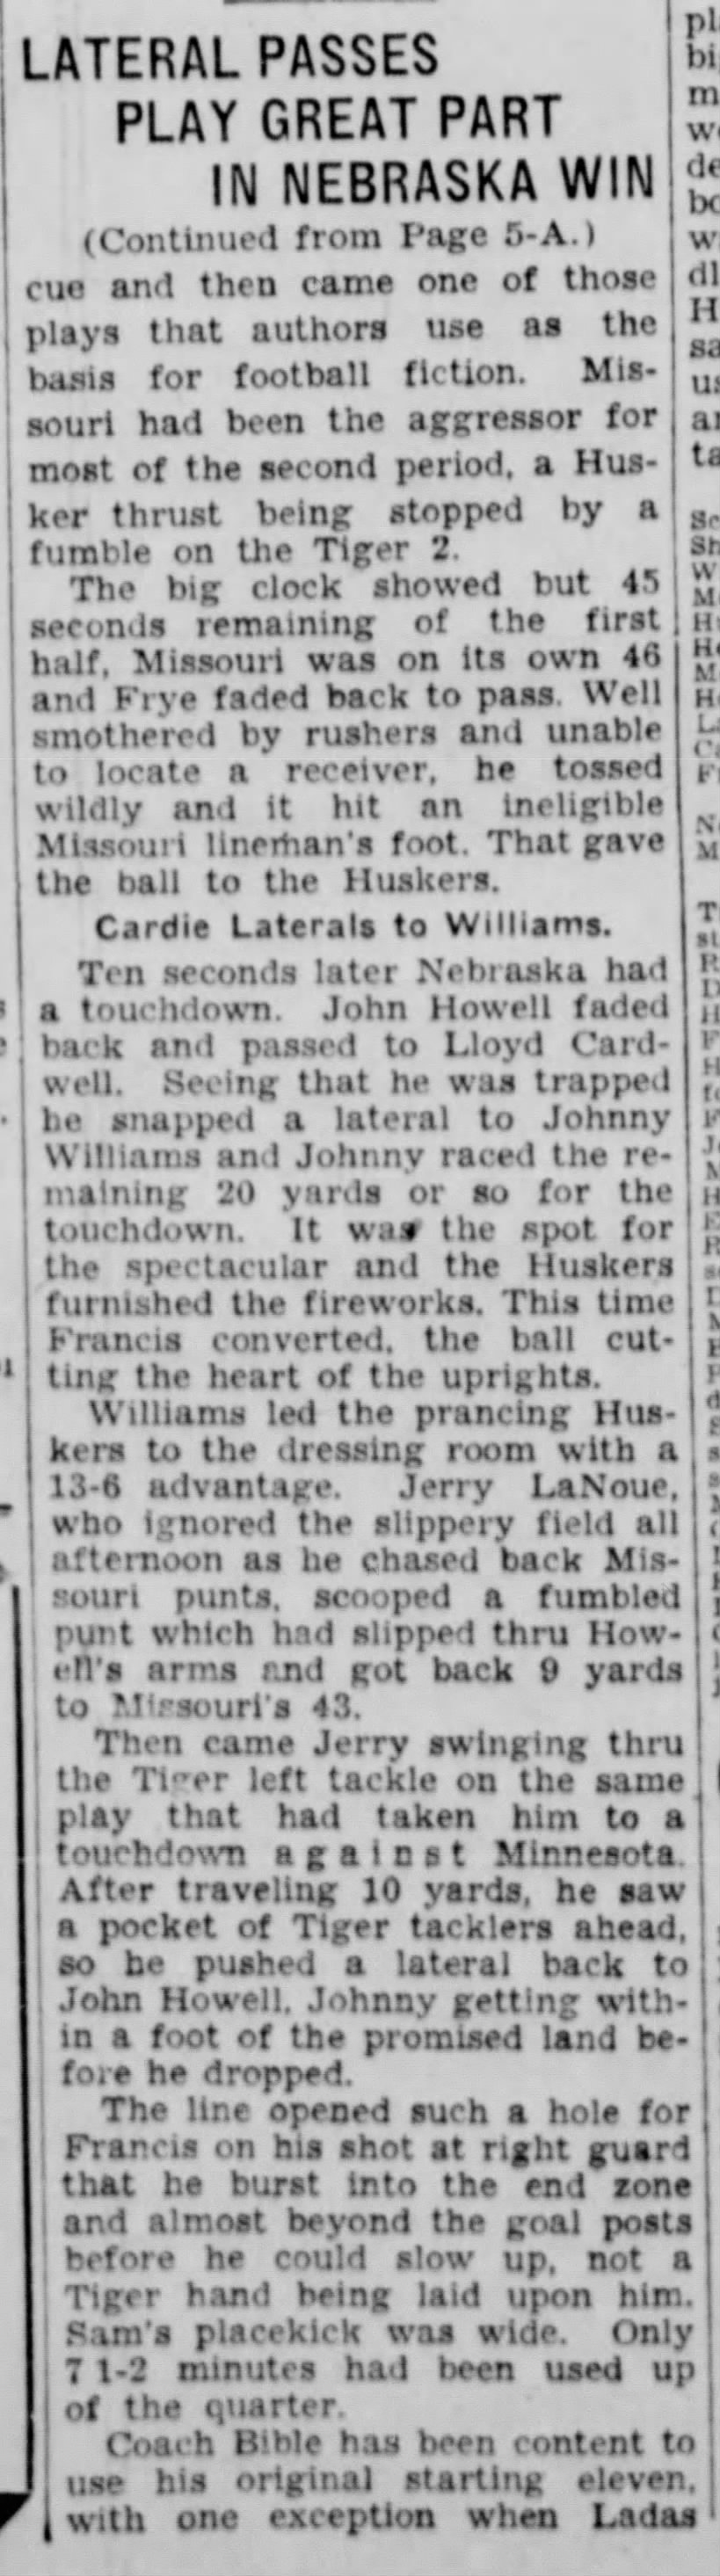 1935 Nebraska-Missouri football, part 3